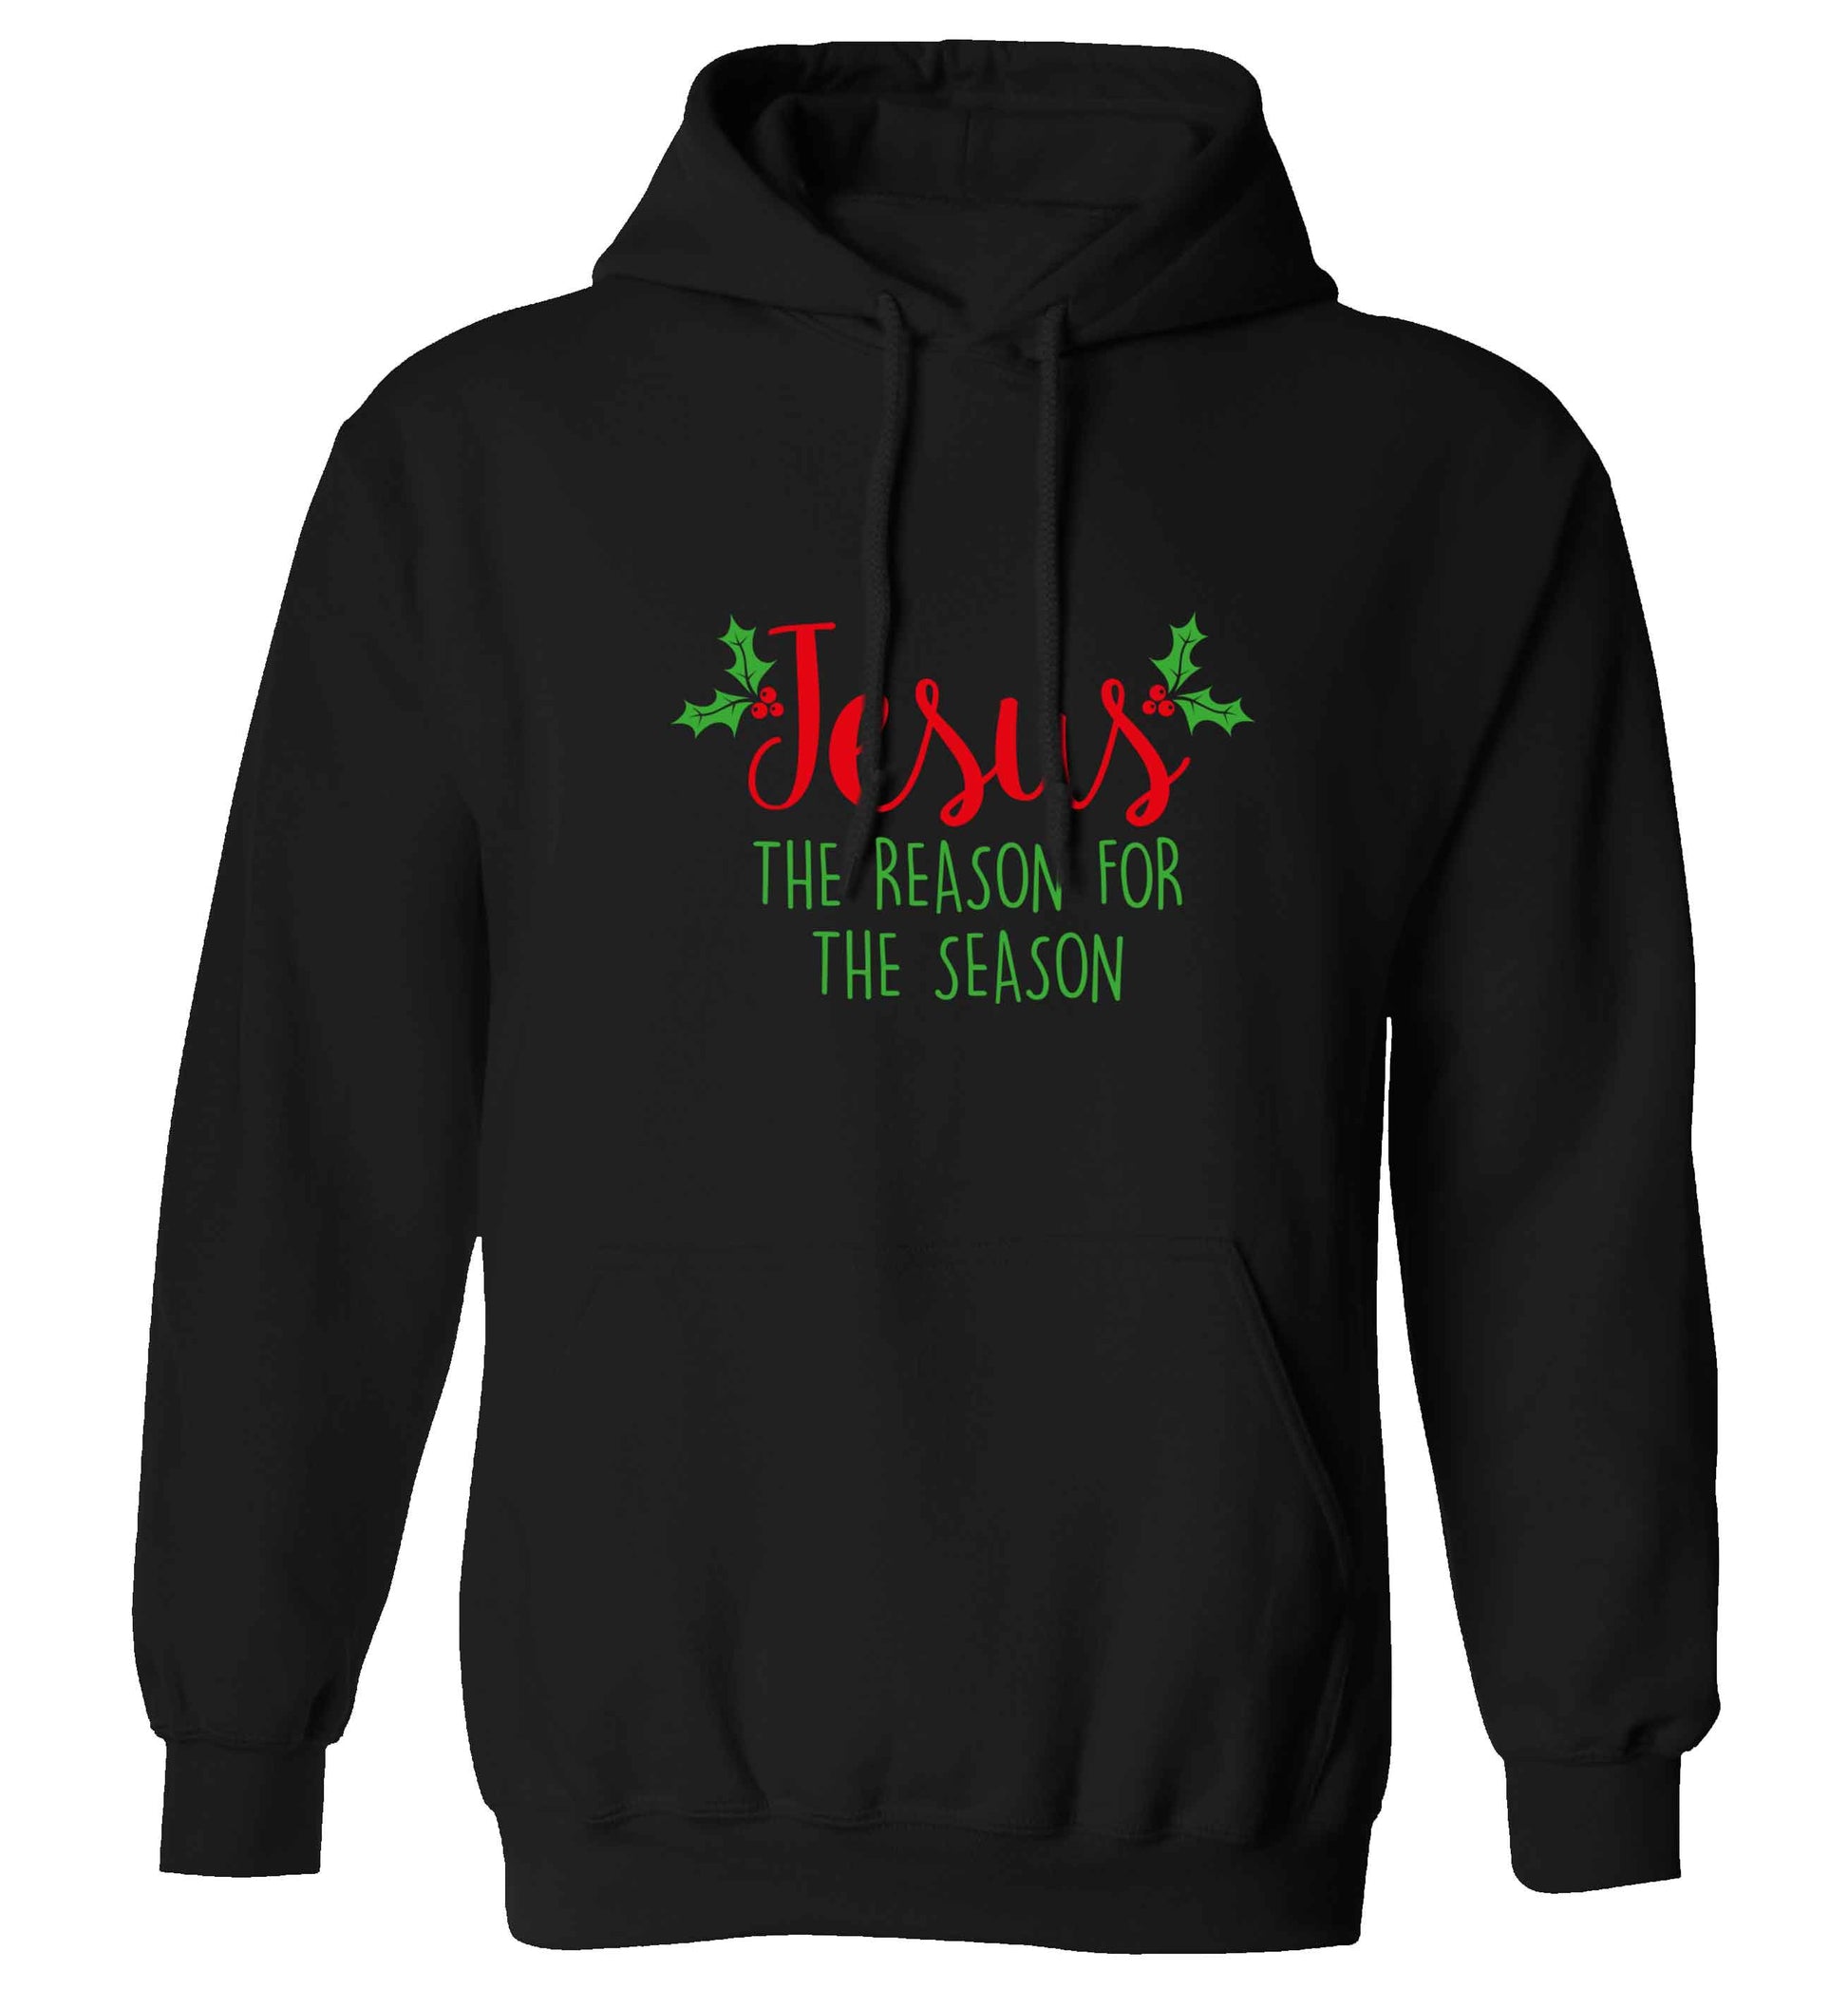 Jesus the reason for the season adults unisex black hoodie 2XL